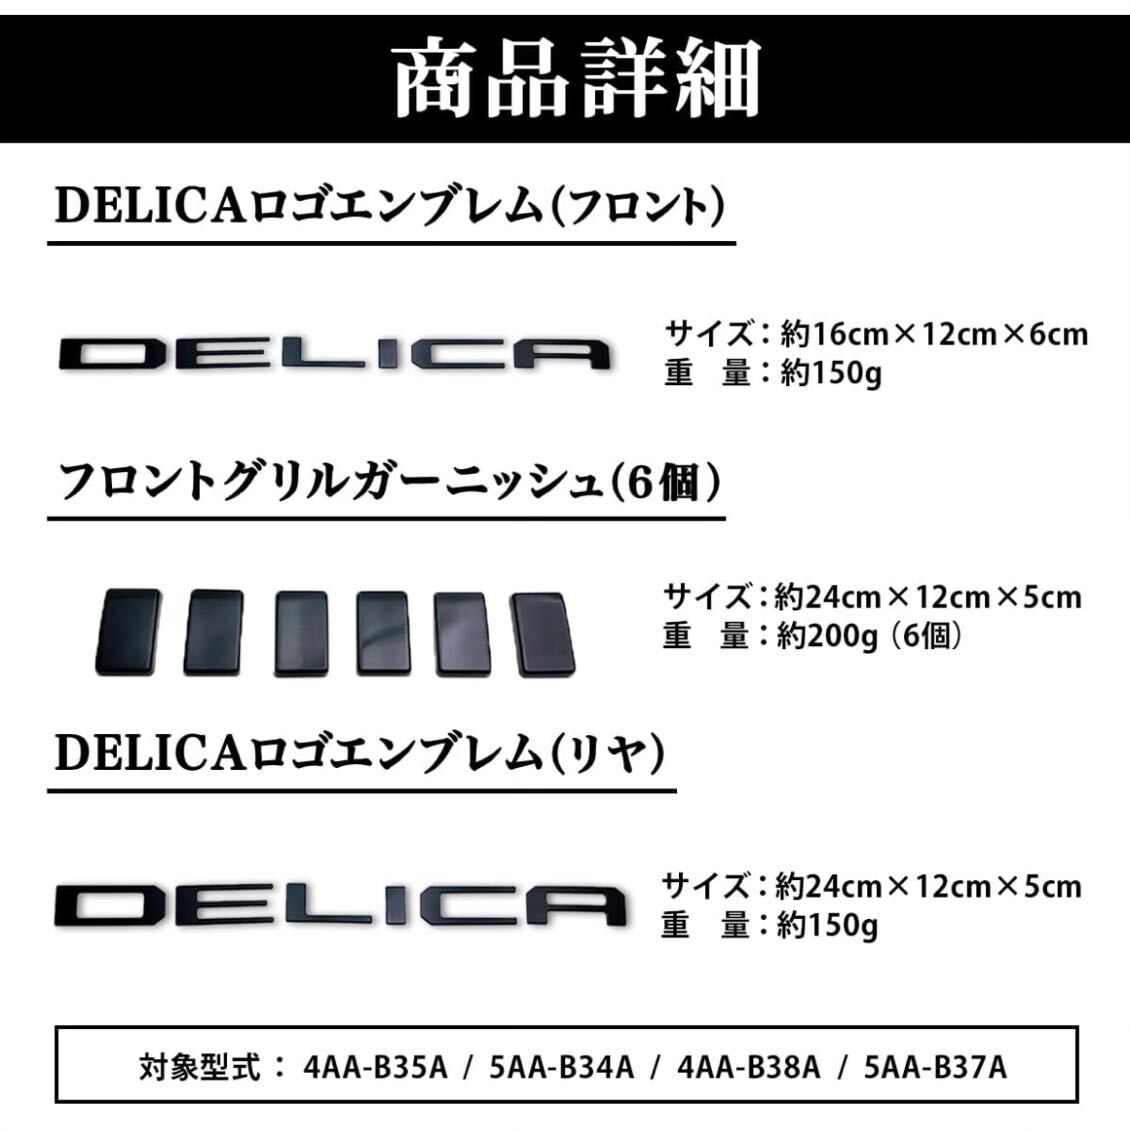  Delica  mini  custom  Запчасти   Delica  mini  DELICAMINI  Mitsubishi   лого   эмблема   передний   custom  Запчасти   одеваем    машина  Запчасти   коврик   серебристый 